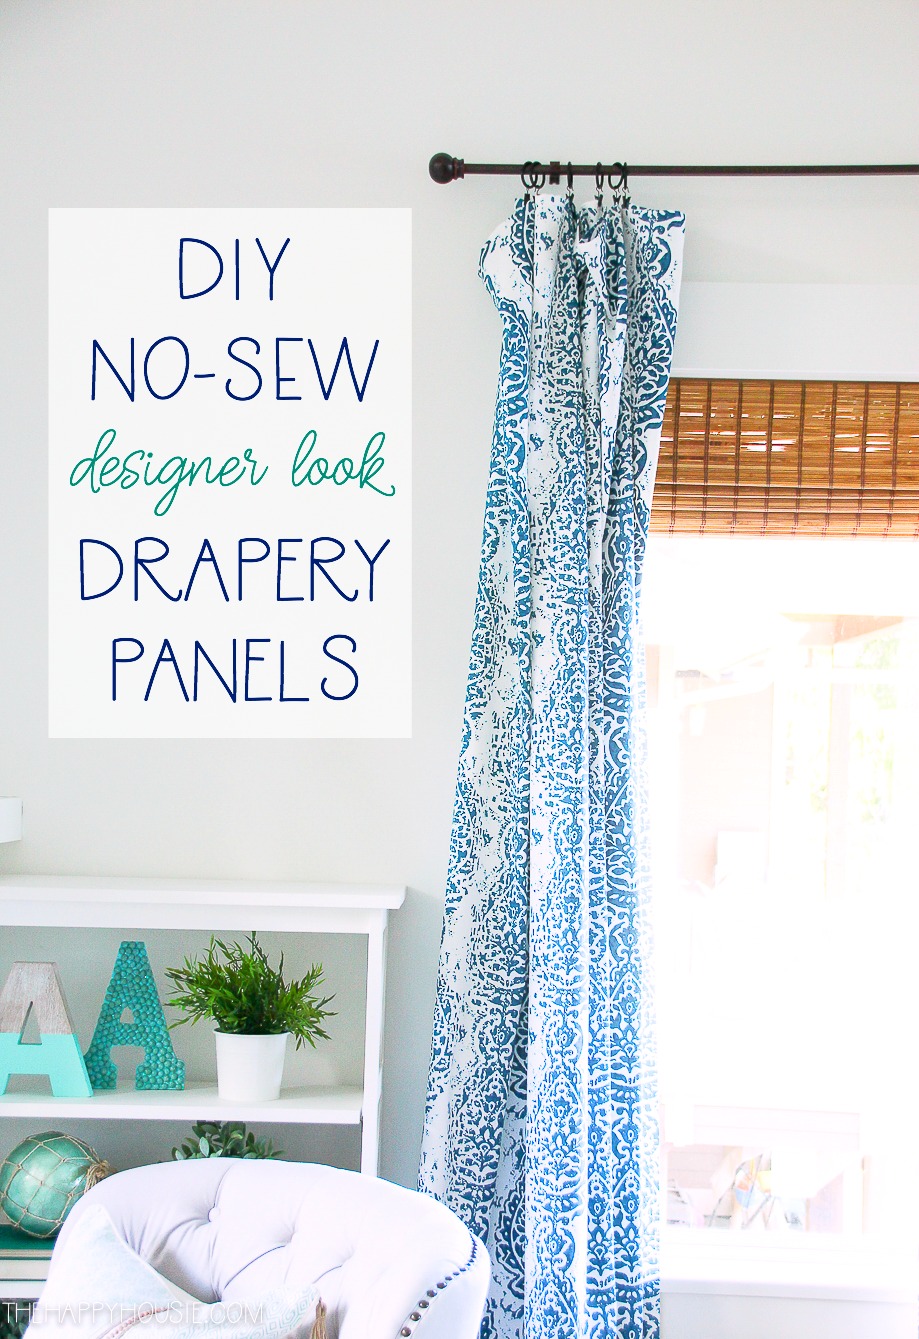 DIY no sew drapery panels graphic.